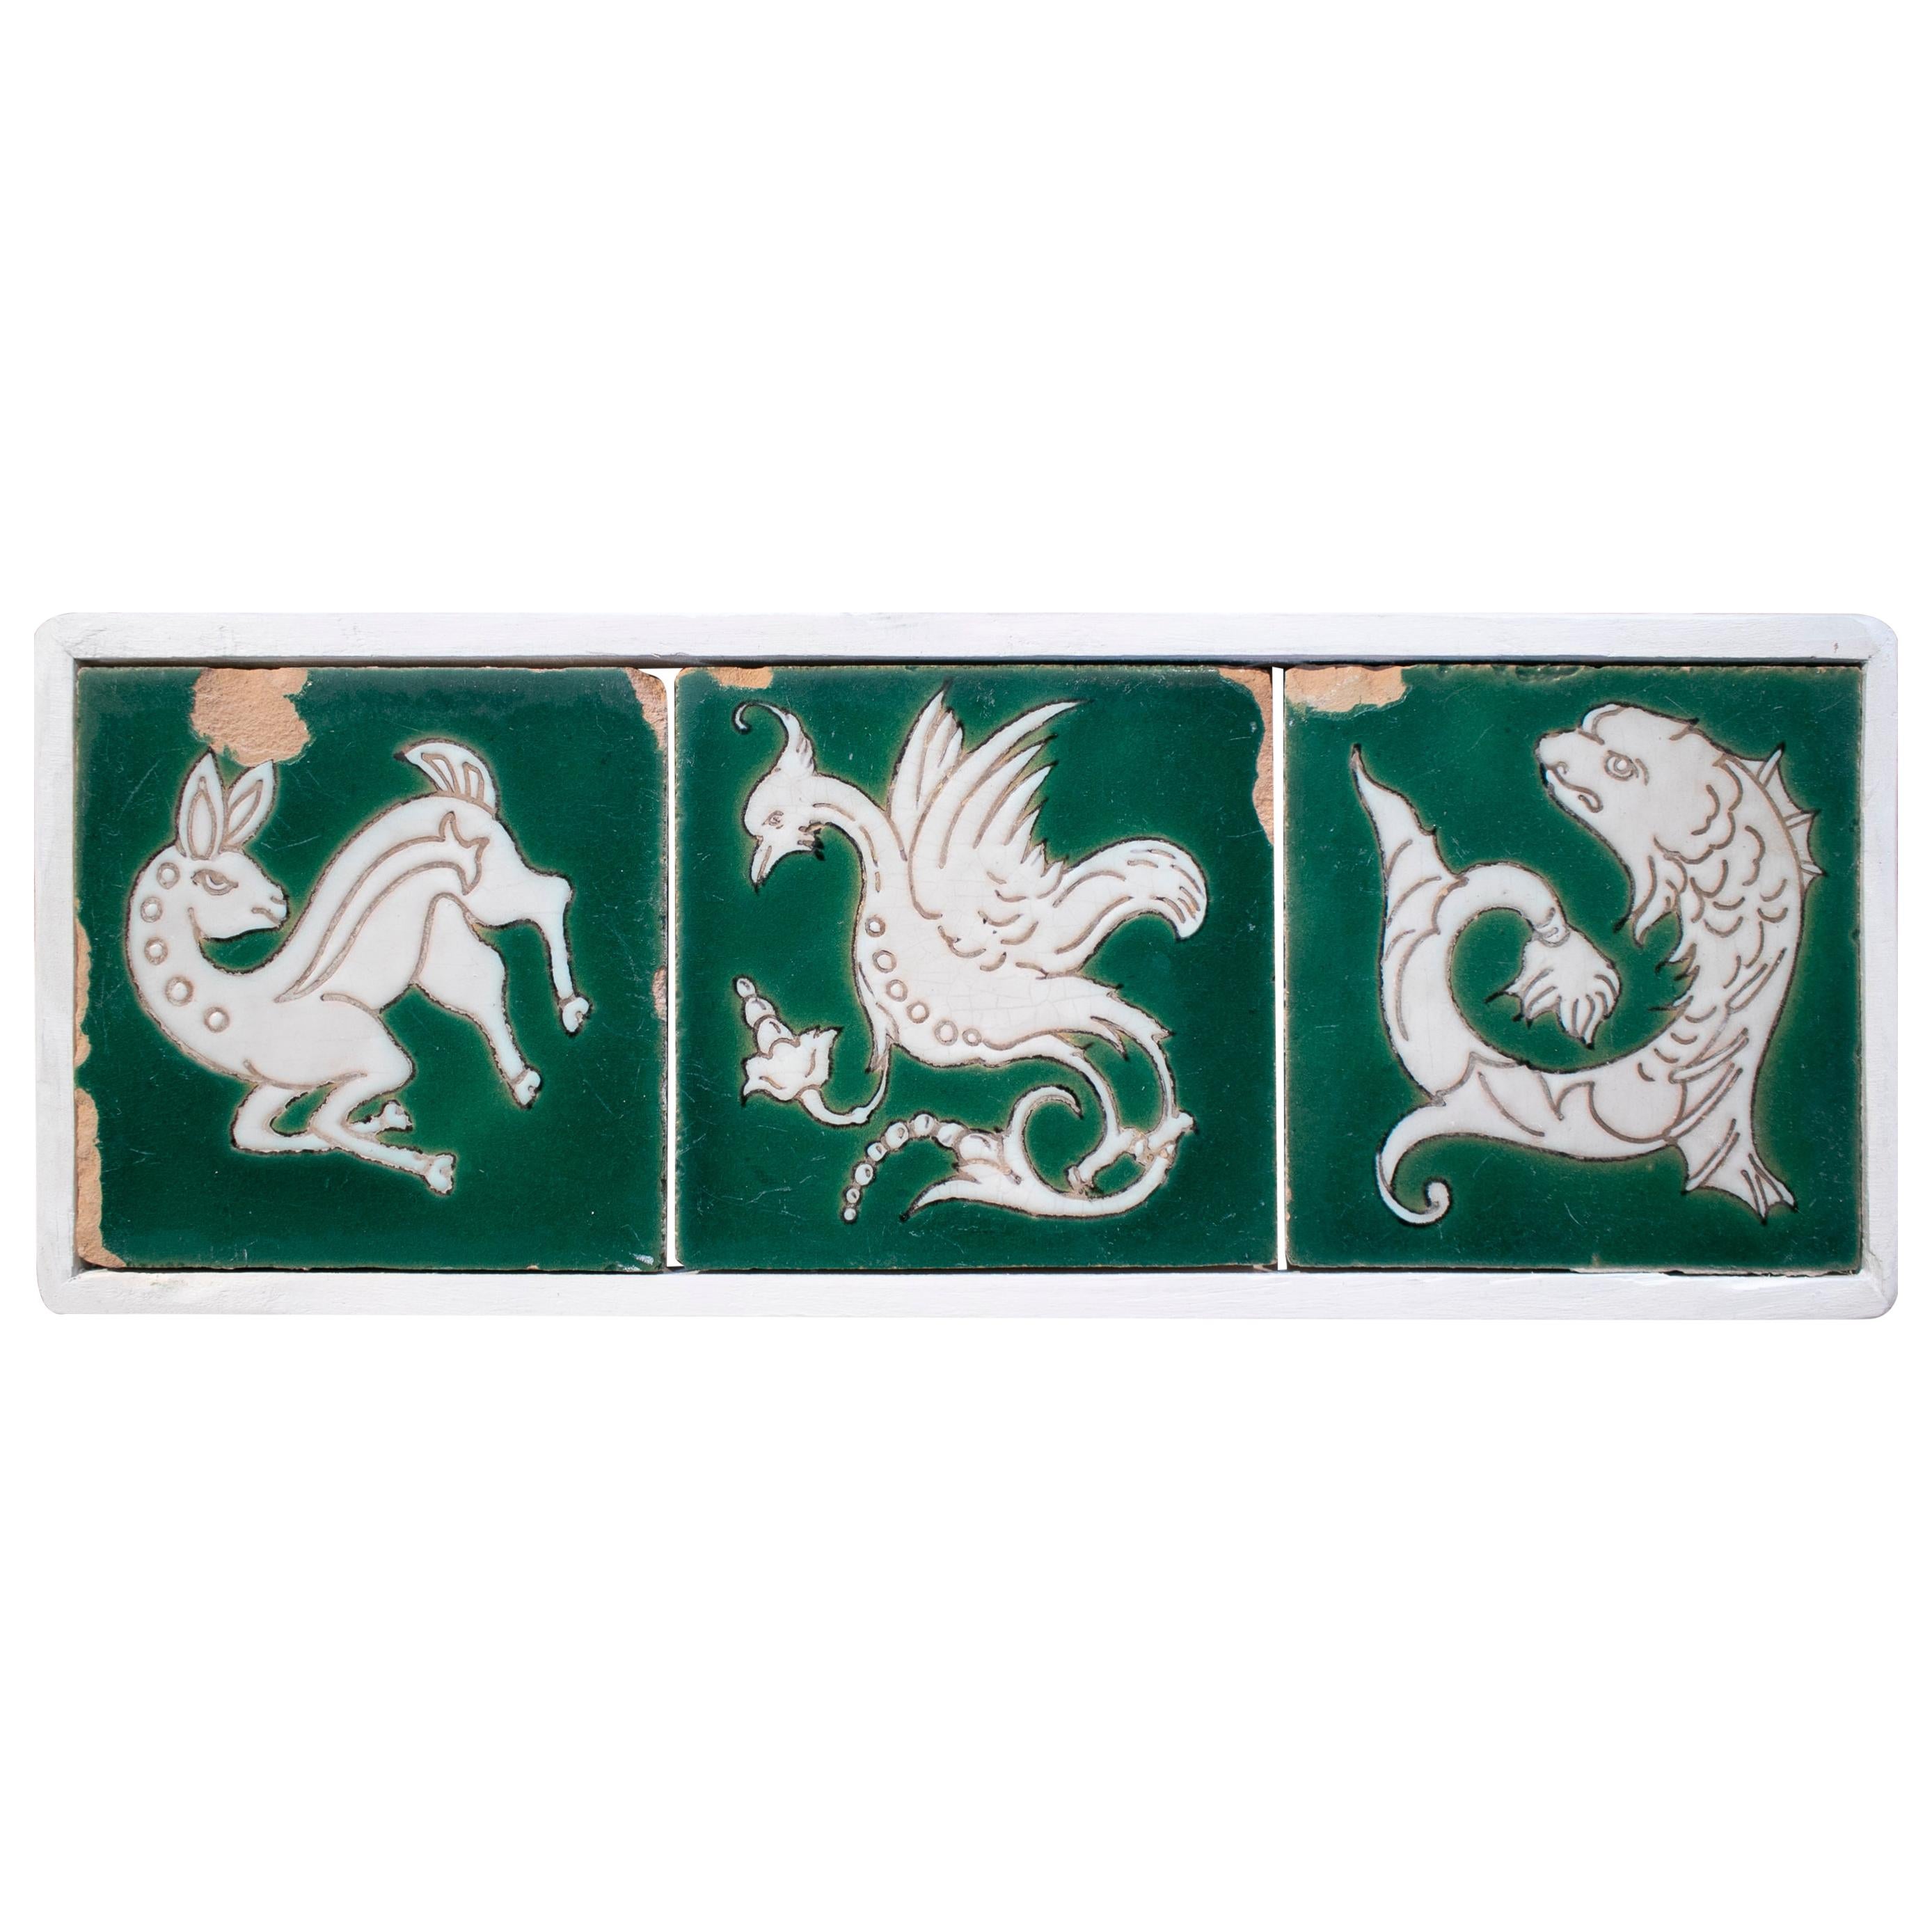 18th Century Spanish Set of 3 Framed Glazed Ceramic Tiles with Animals